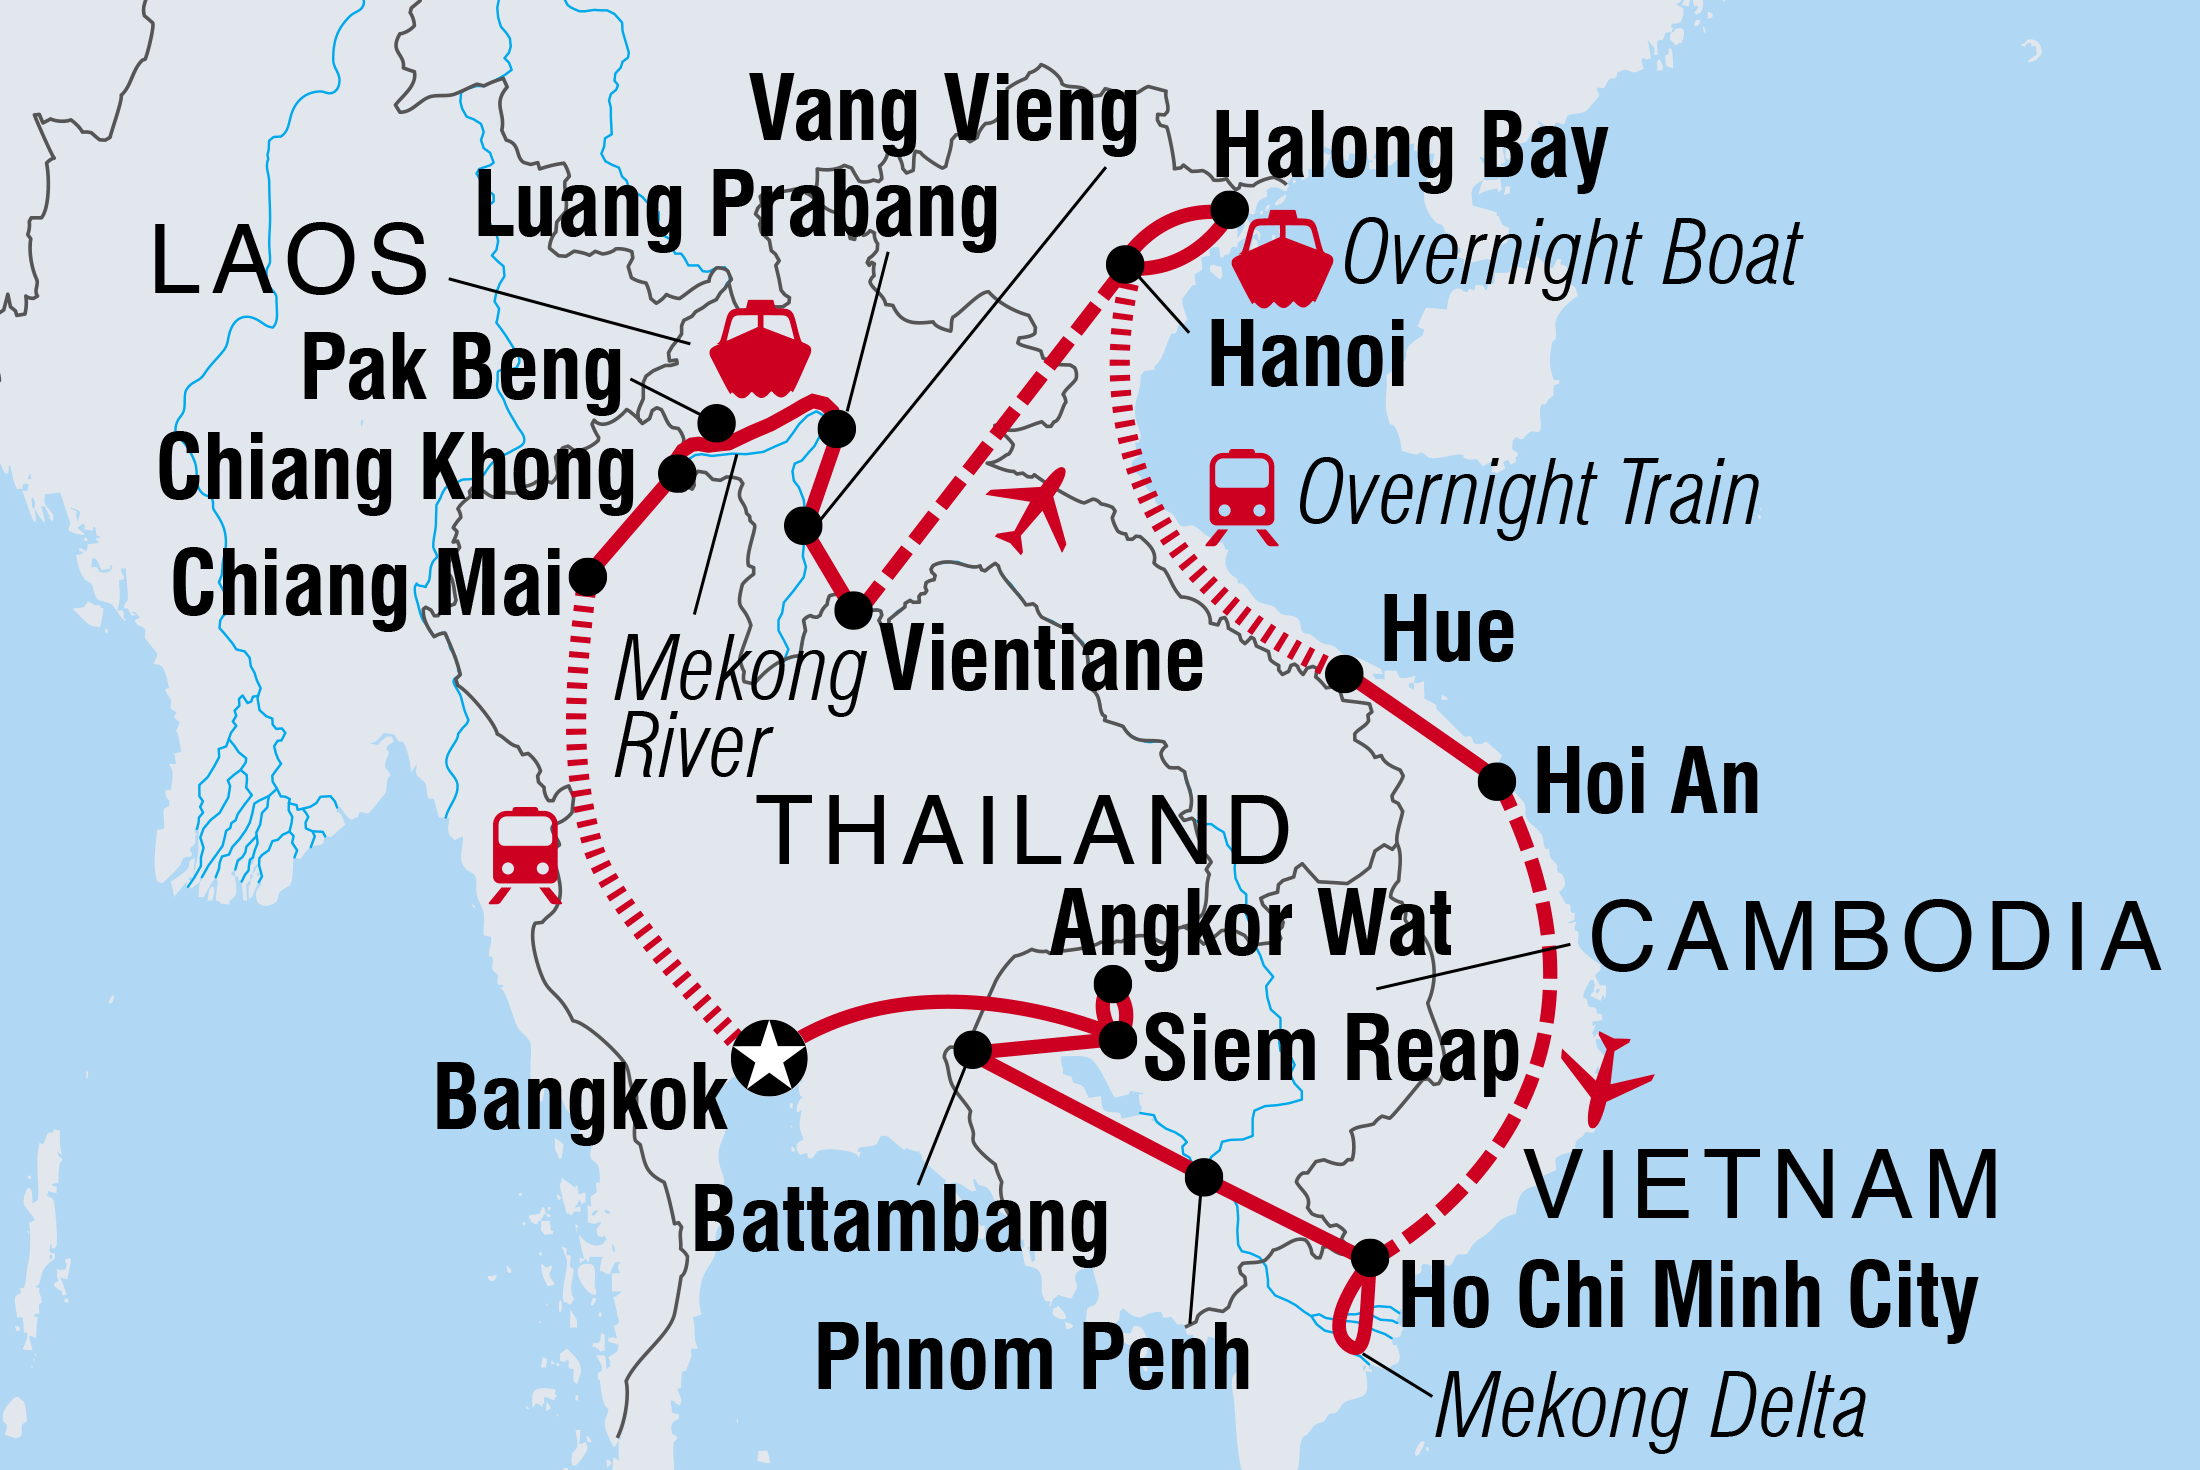 bangkok vietnam cambodia tour